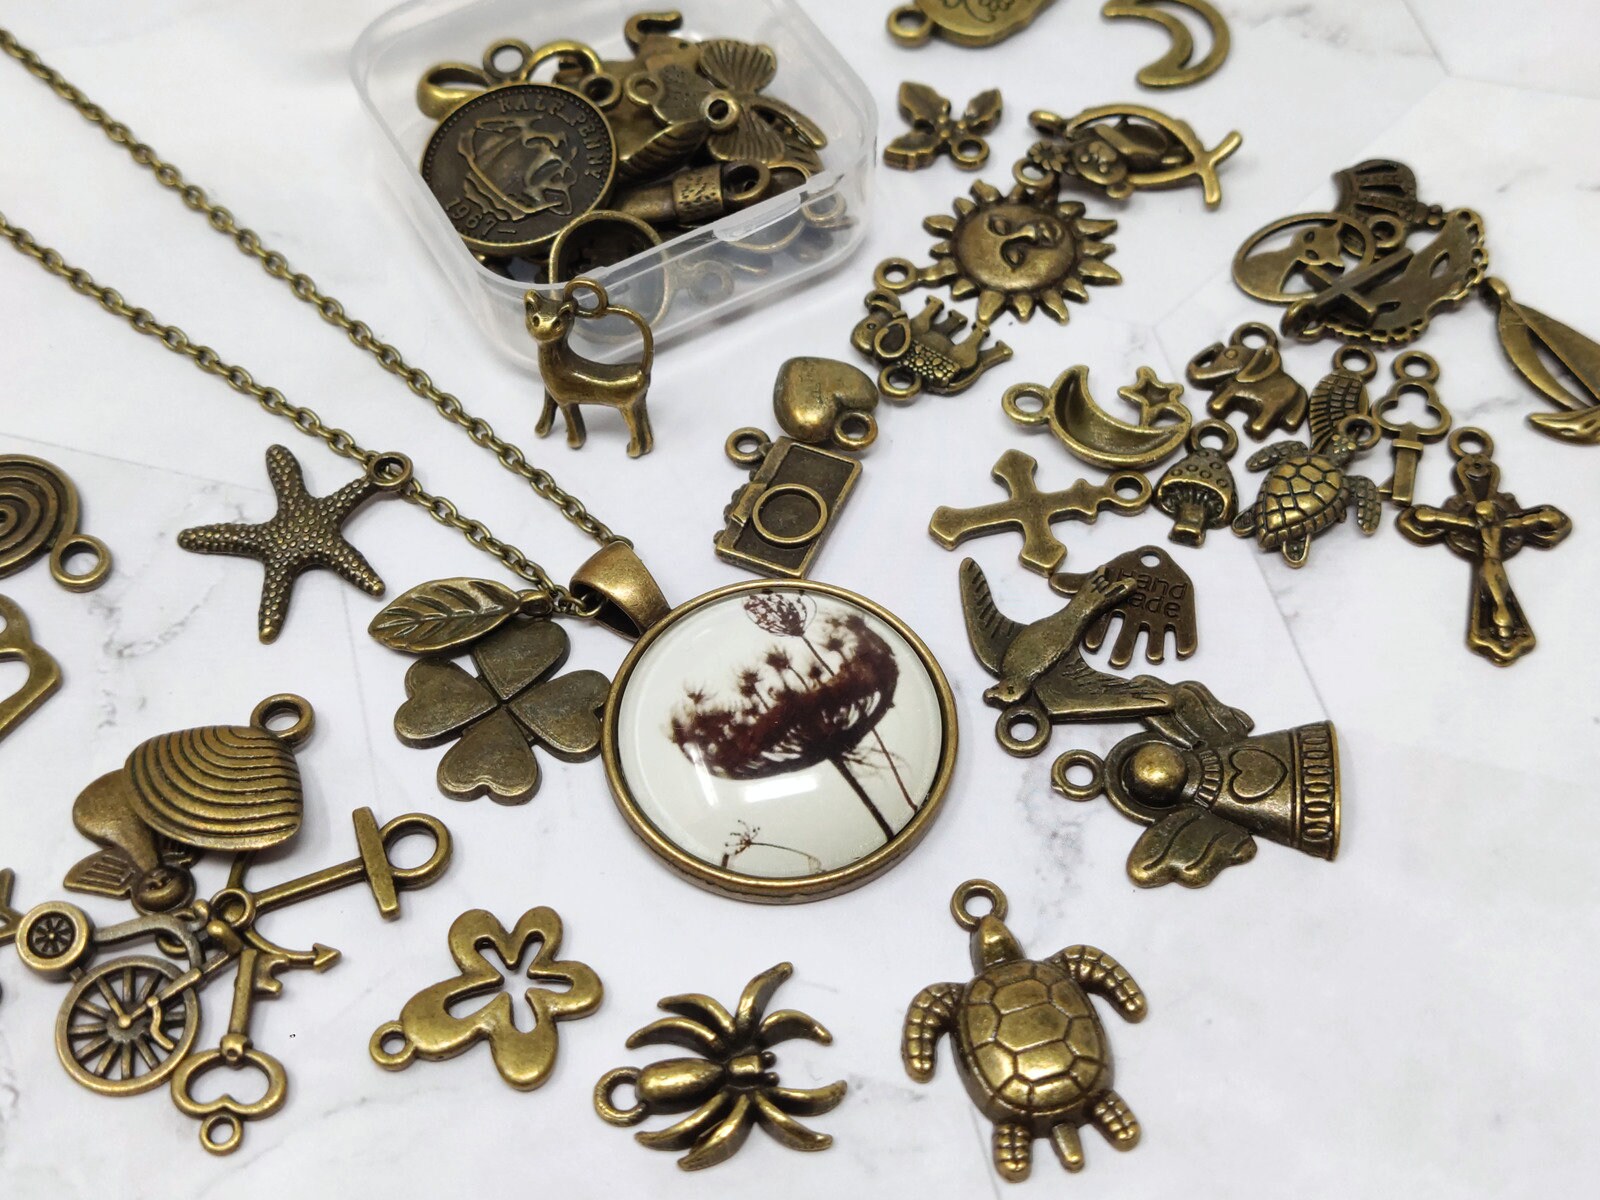 90PCS Mixed Tibetan Silver Charms Pendants Jewelry Making Findings